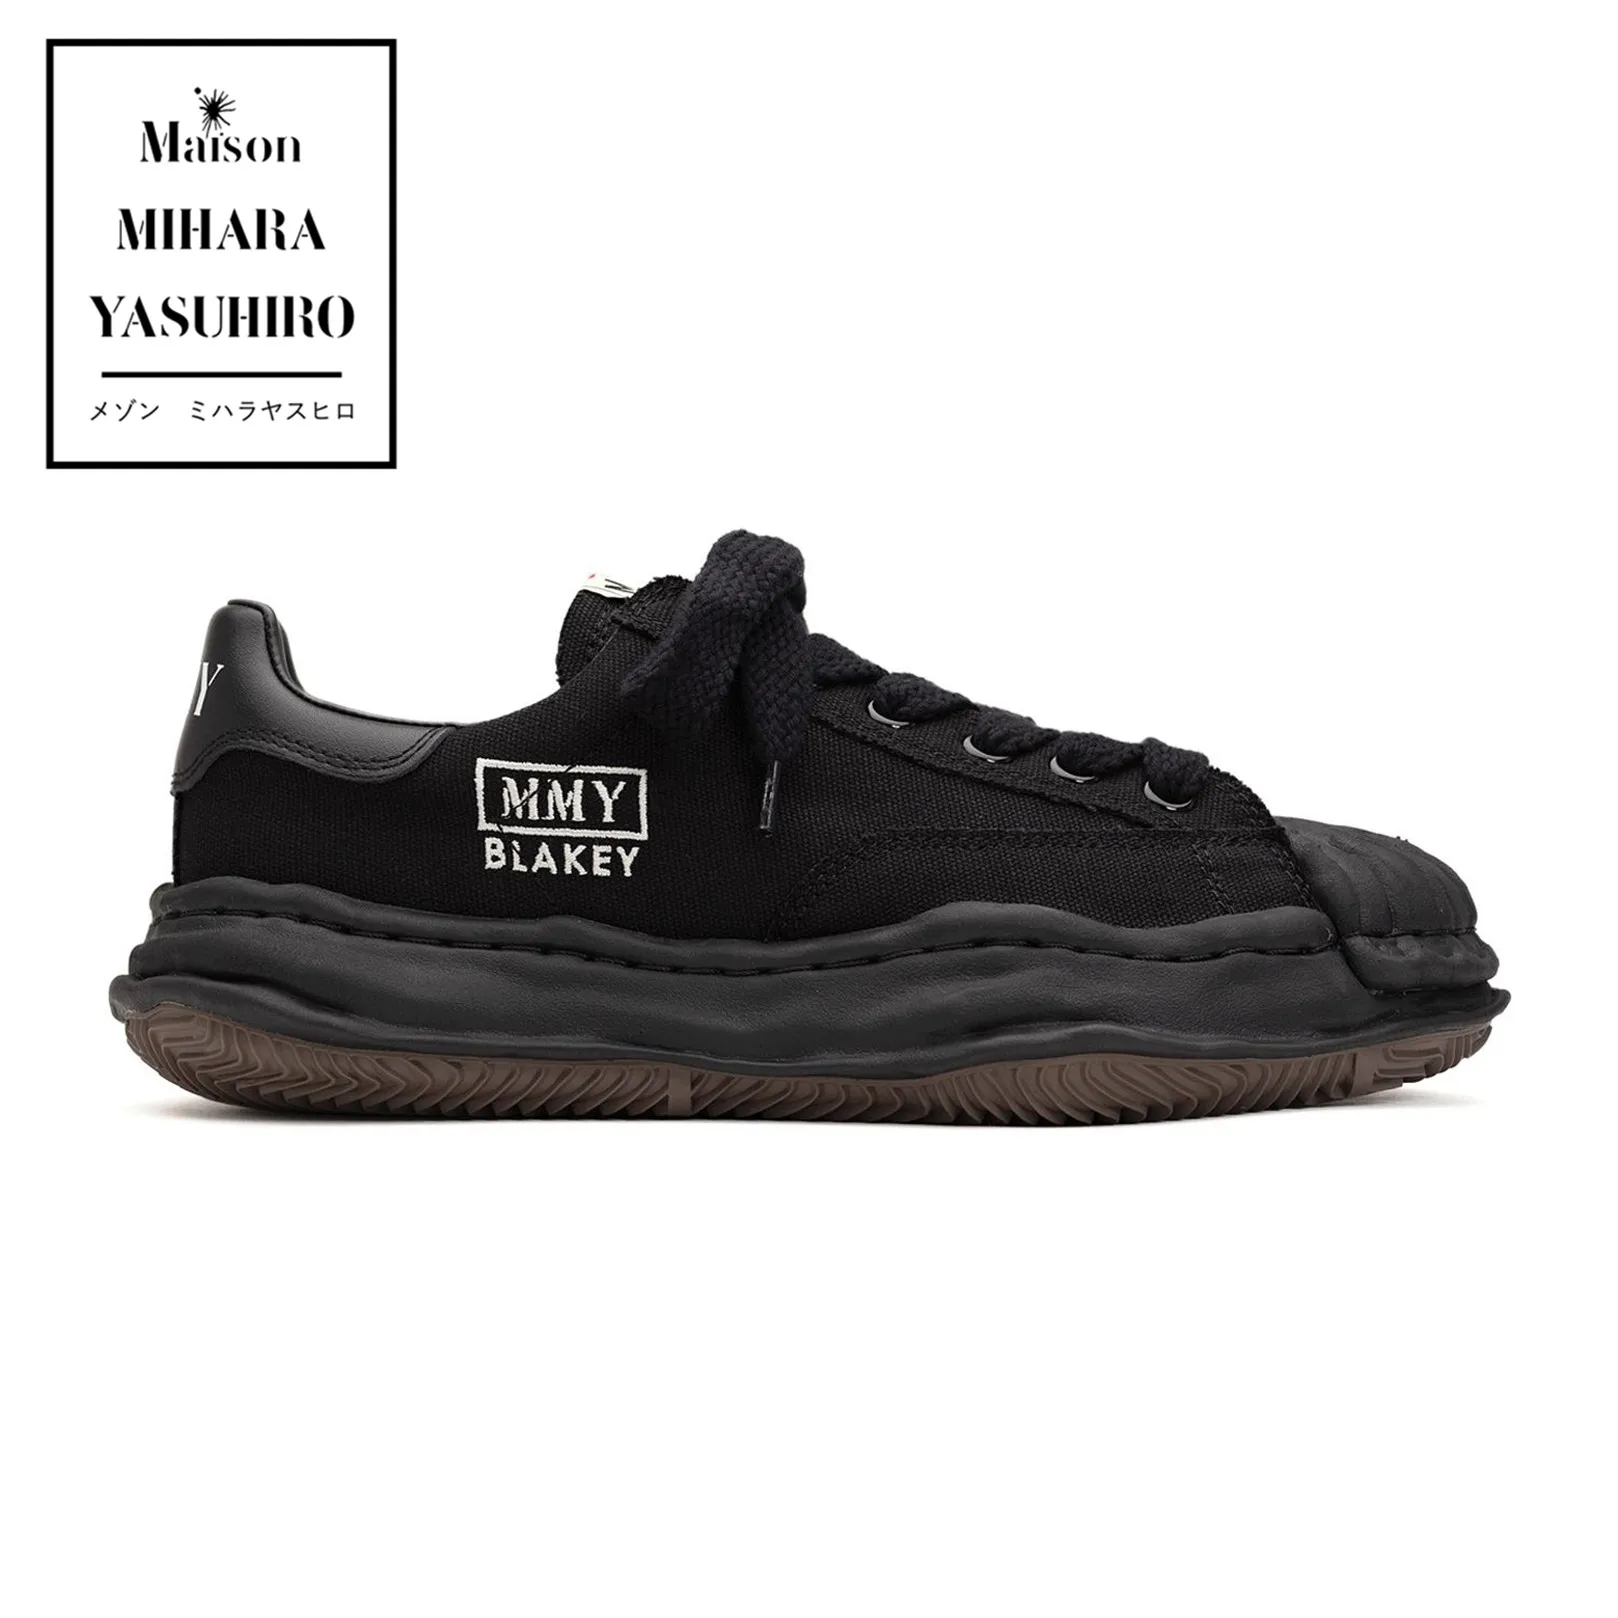 

MMY Maison MIHARA YASUHIRO Wayne BLAKEY VL OG Sole Leather Logo Low-top Sneaker Black Men's CANVAS shoes Women's polyester